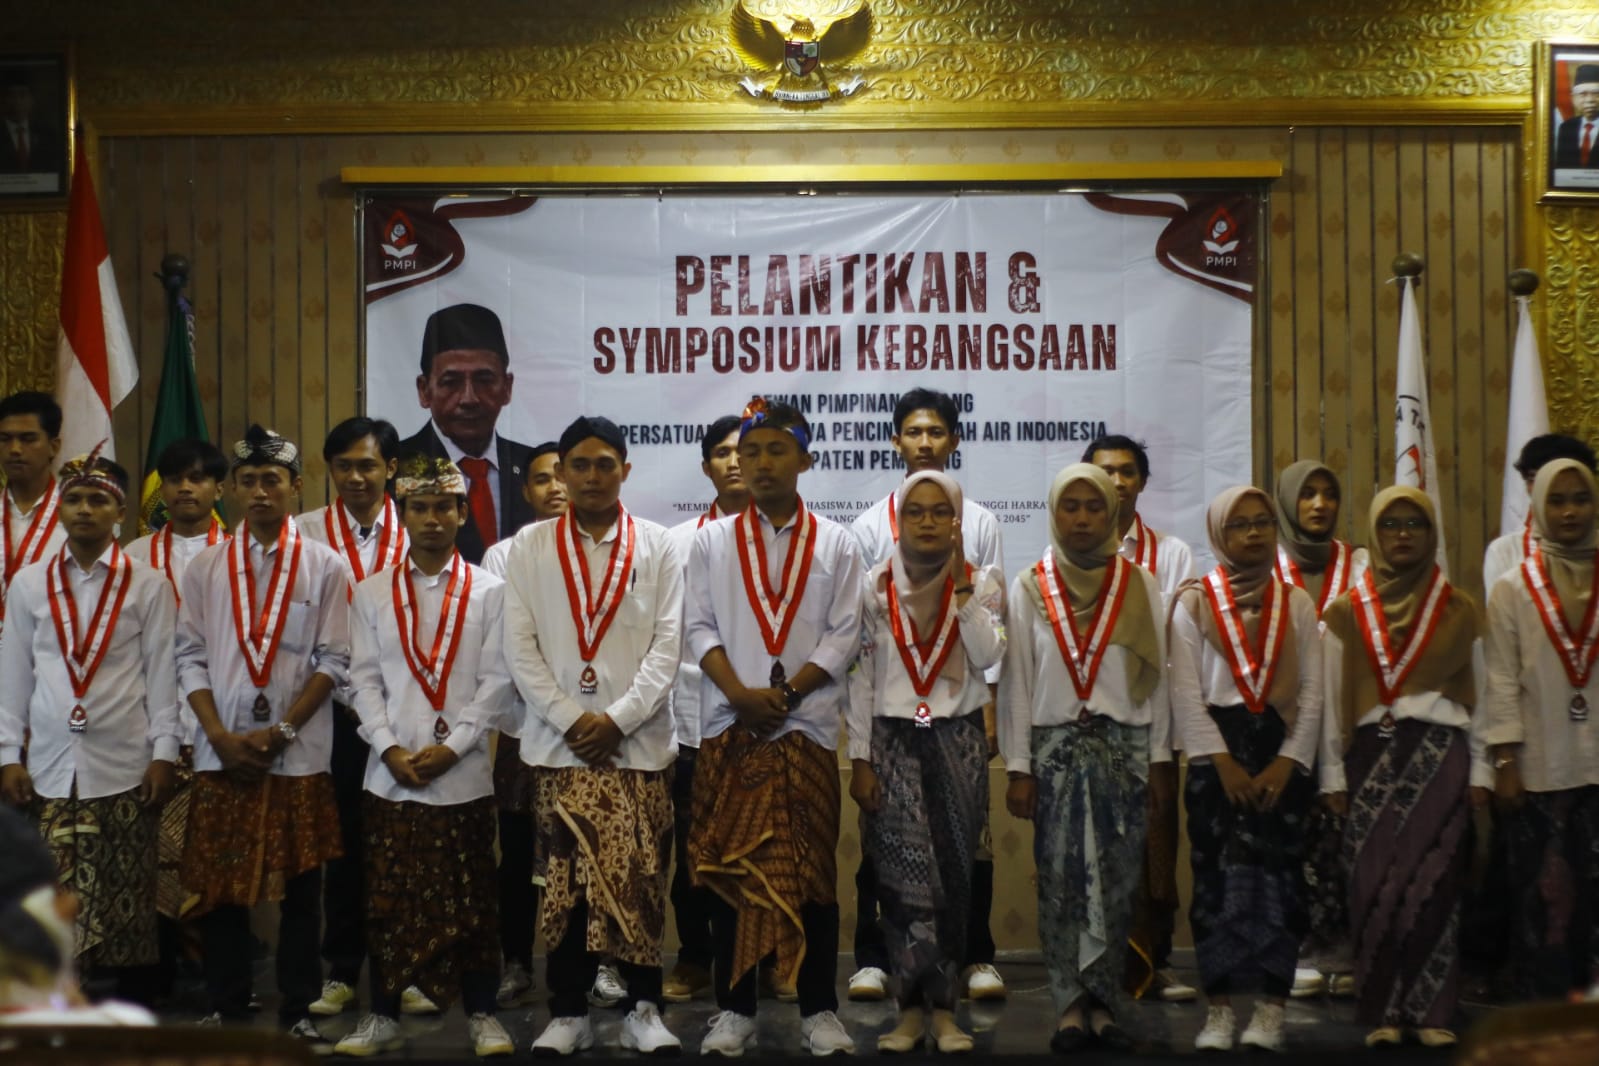 DPC PMPI Kabupaten Pemalang gelar Pelantikan dan Symposium Kebangsaan "Jati diri bangsa menuju Indonesia emas 2045"